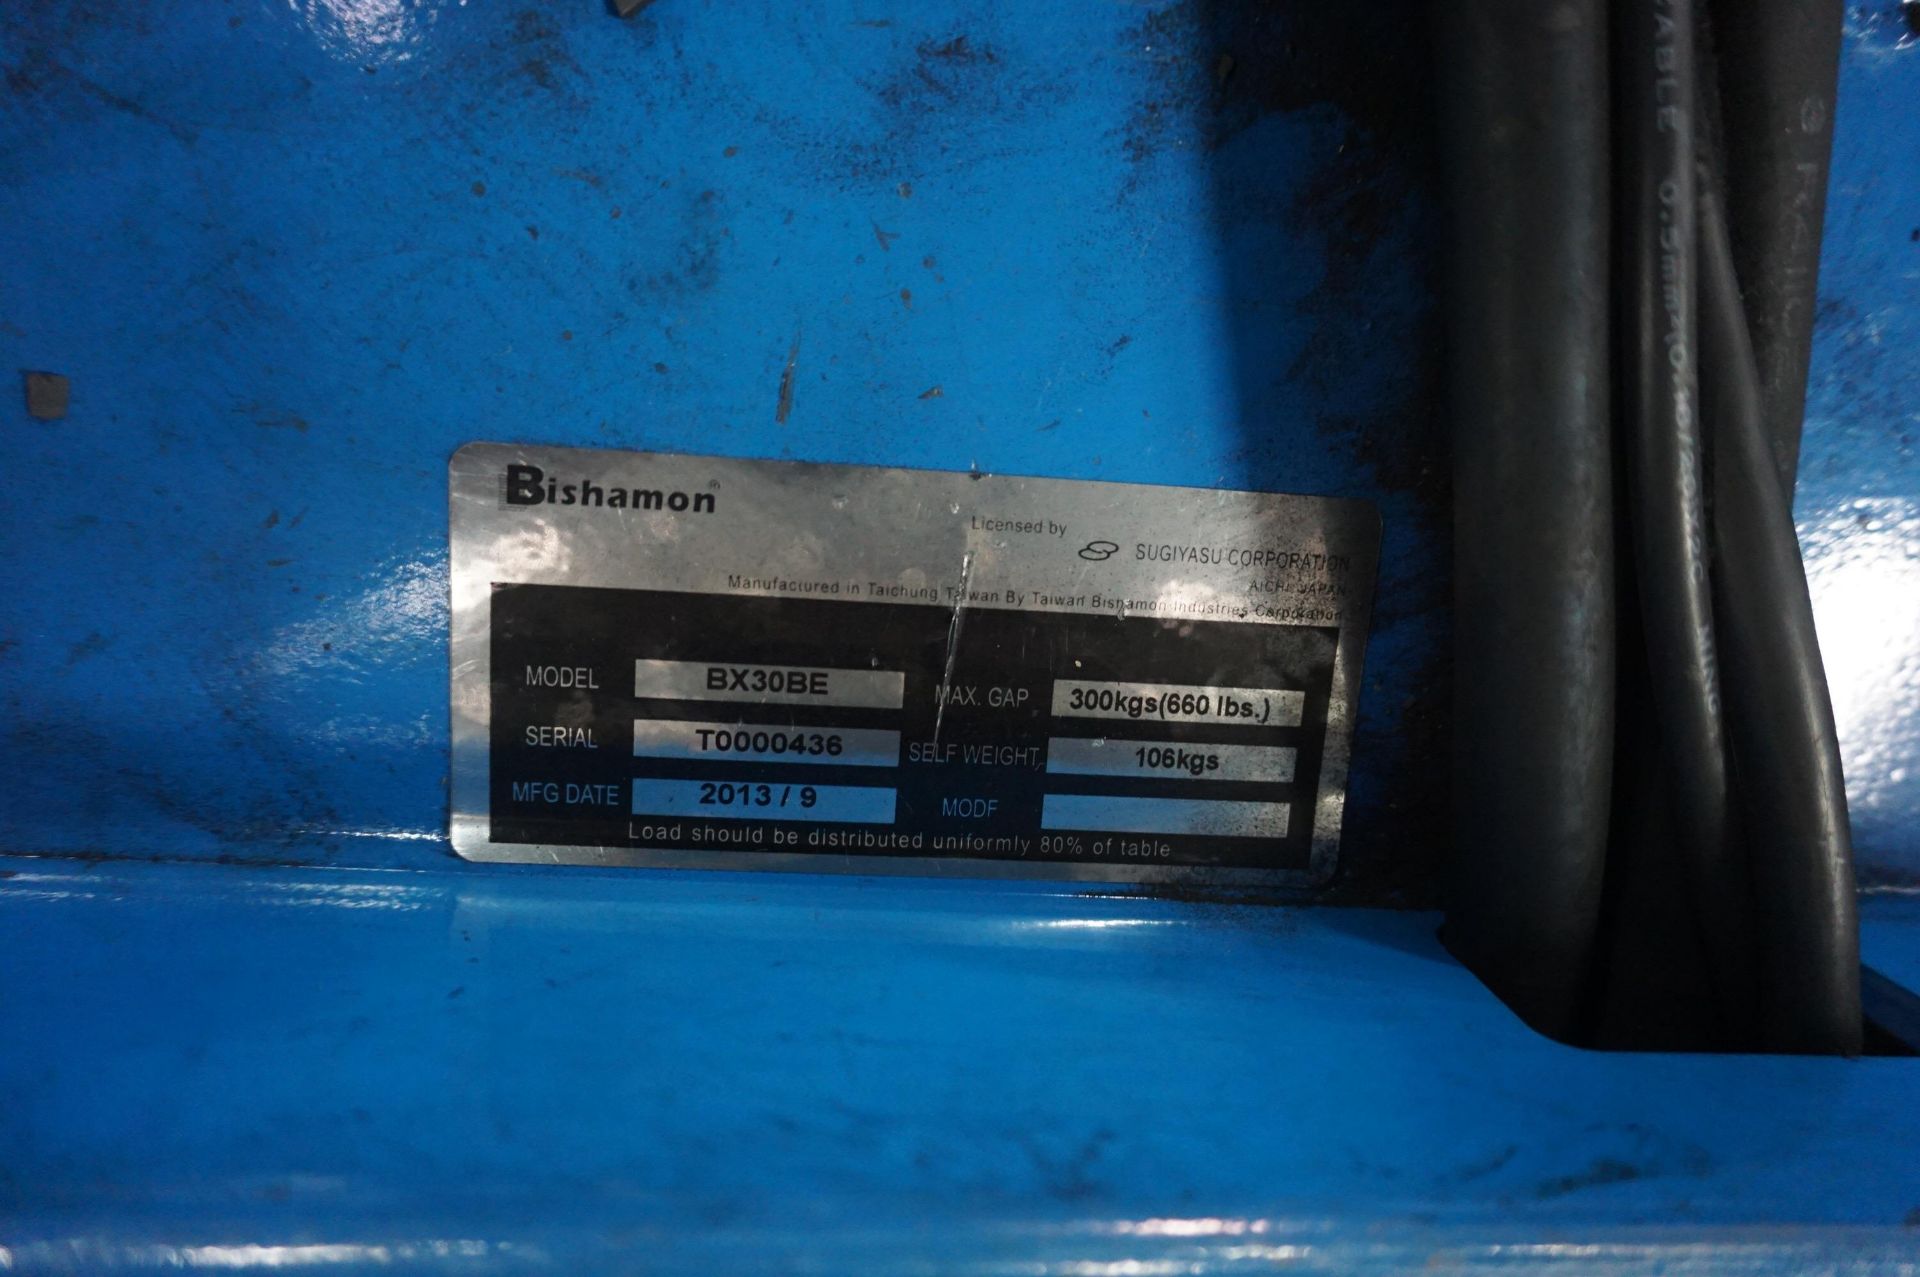 BISHAMON MOBILIFT BATTERY POWERED SCISSOR LIFT CART, MODEL BX30BE, S/N T0000436, 660 LB CAPACITY - Image 3 of 6